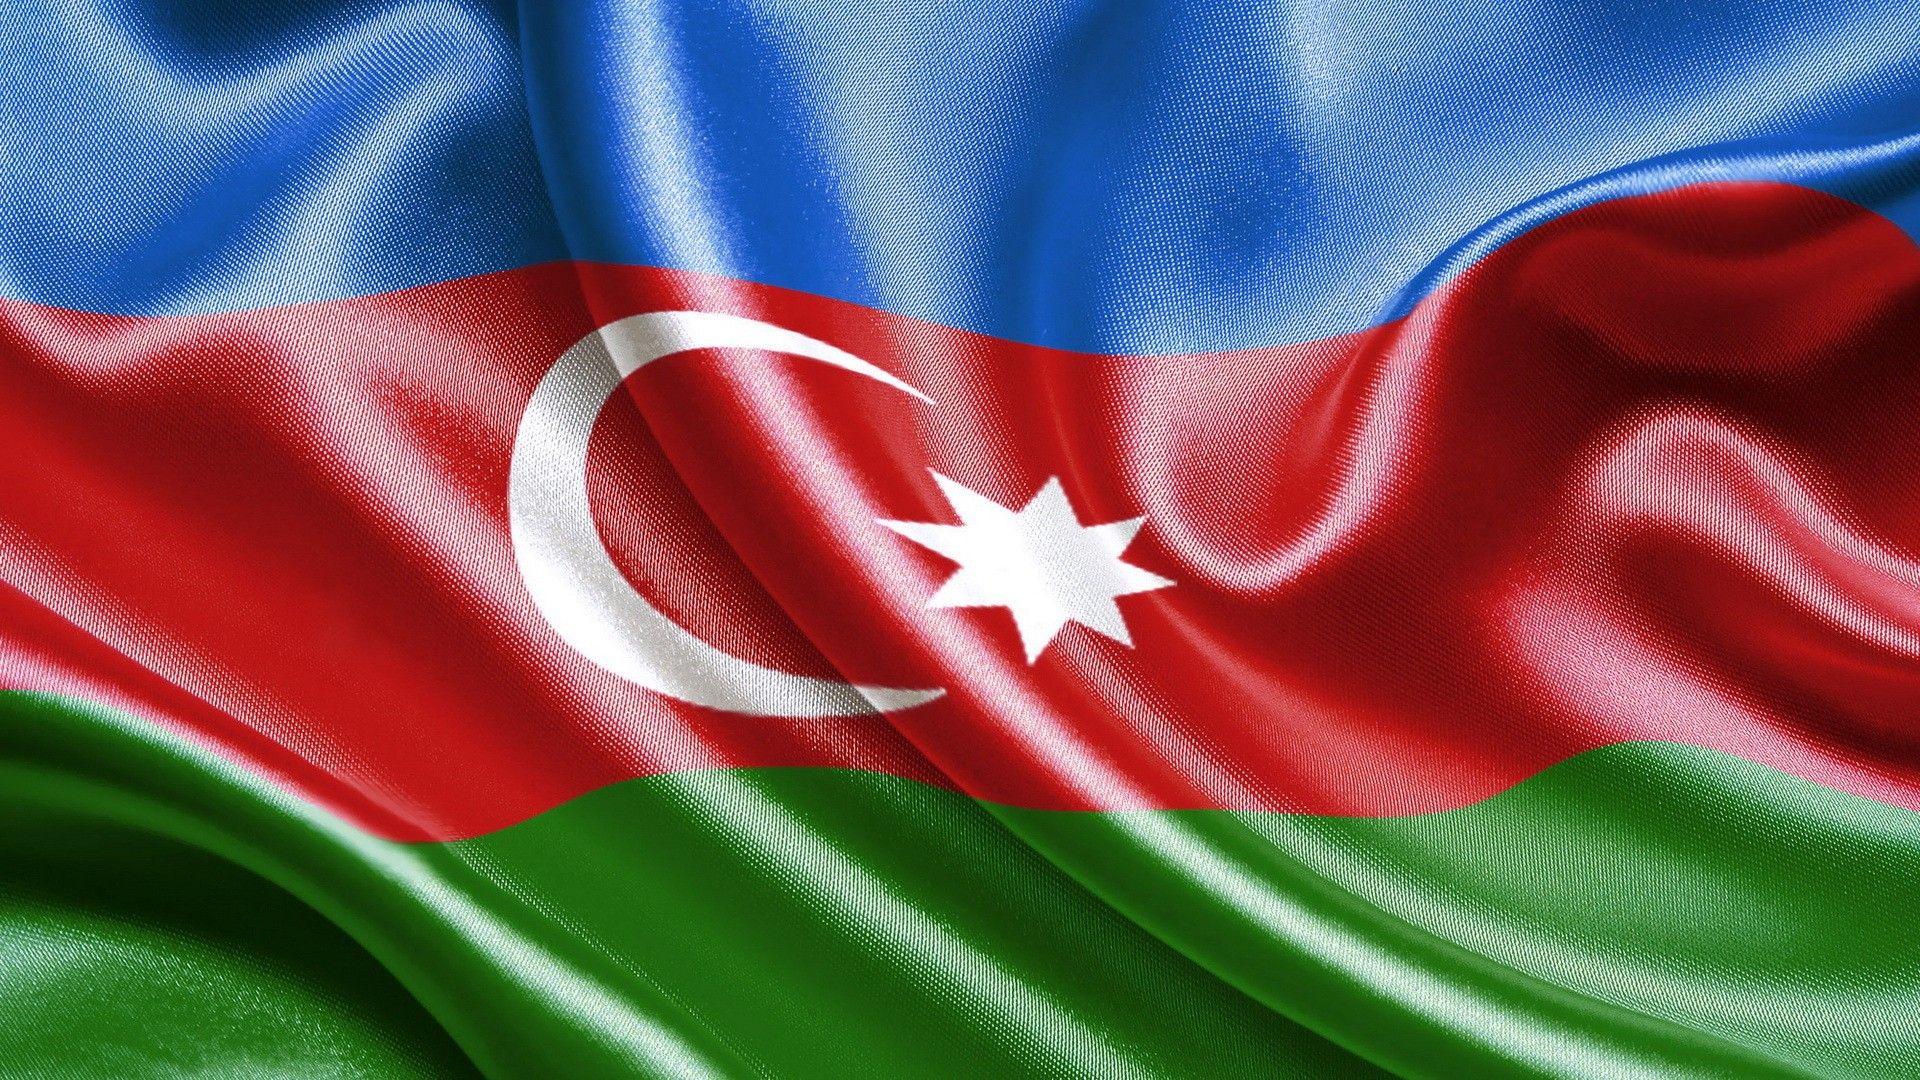 Flag of Azerbaijan wallpaper. Education. Flag